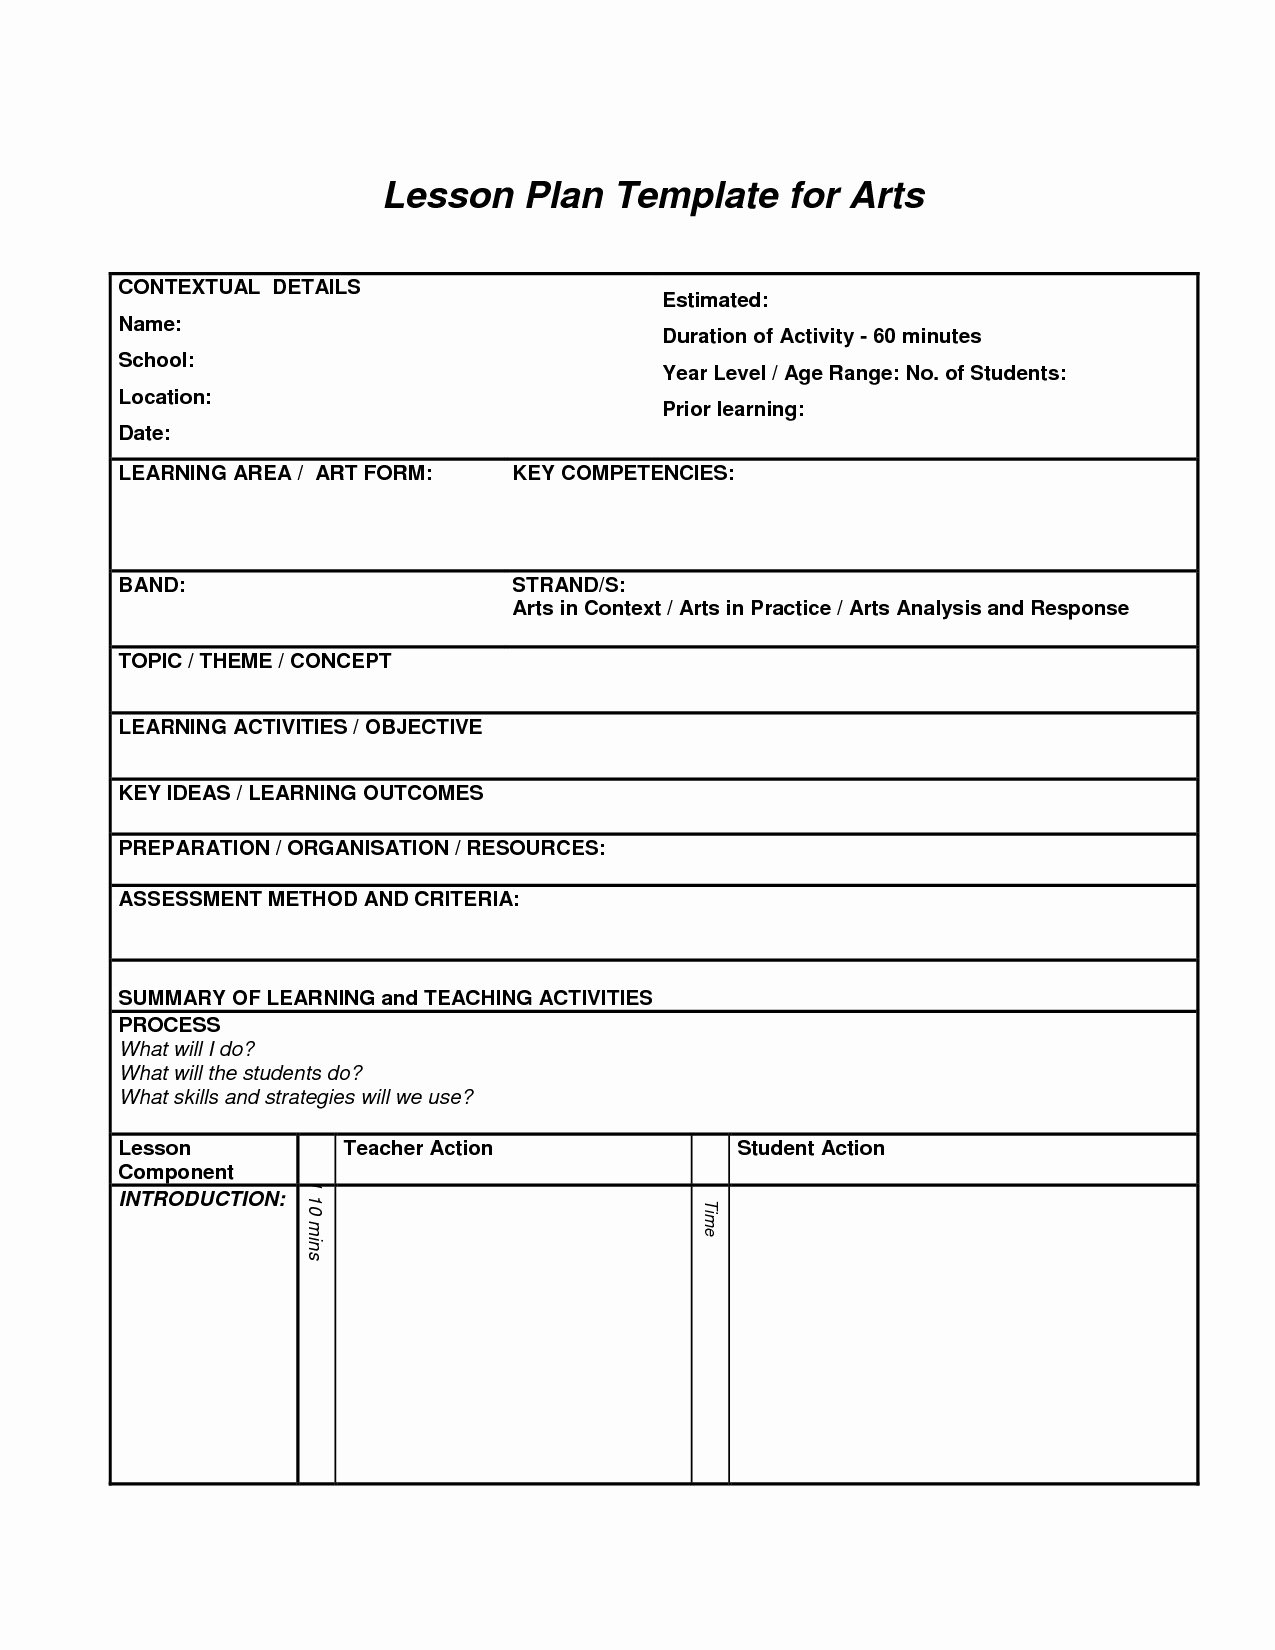 Edtpa Lesson Plan Template Fresh Edtpa Lesson Plan Template Word Document